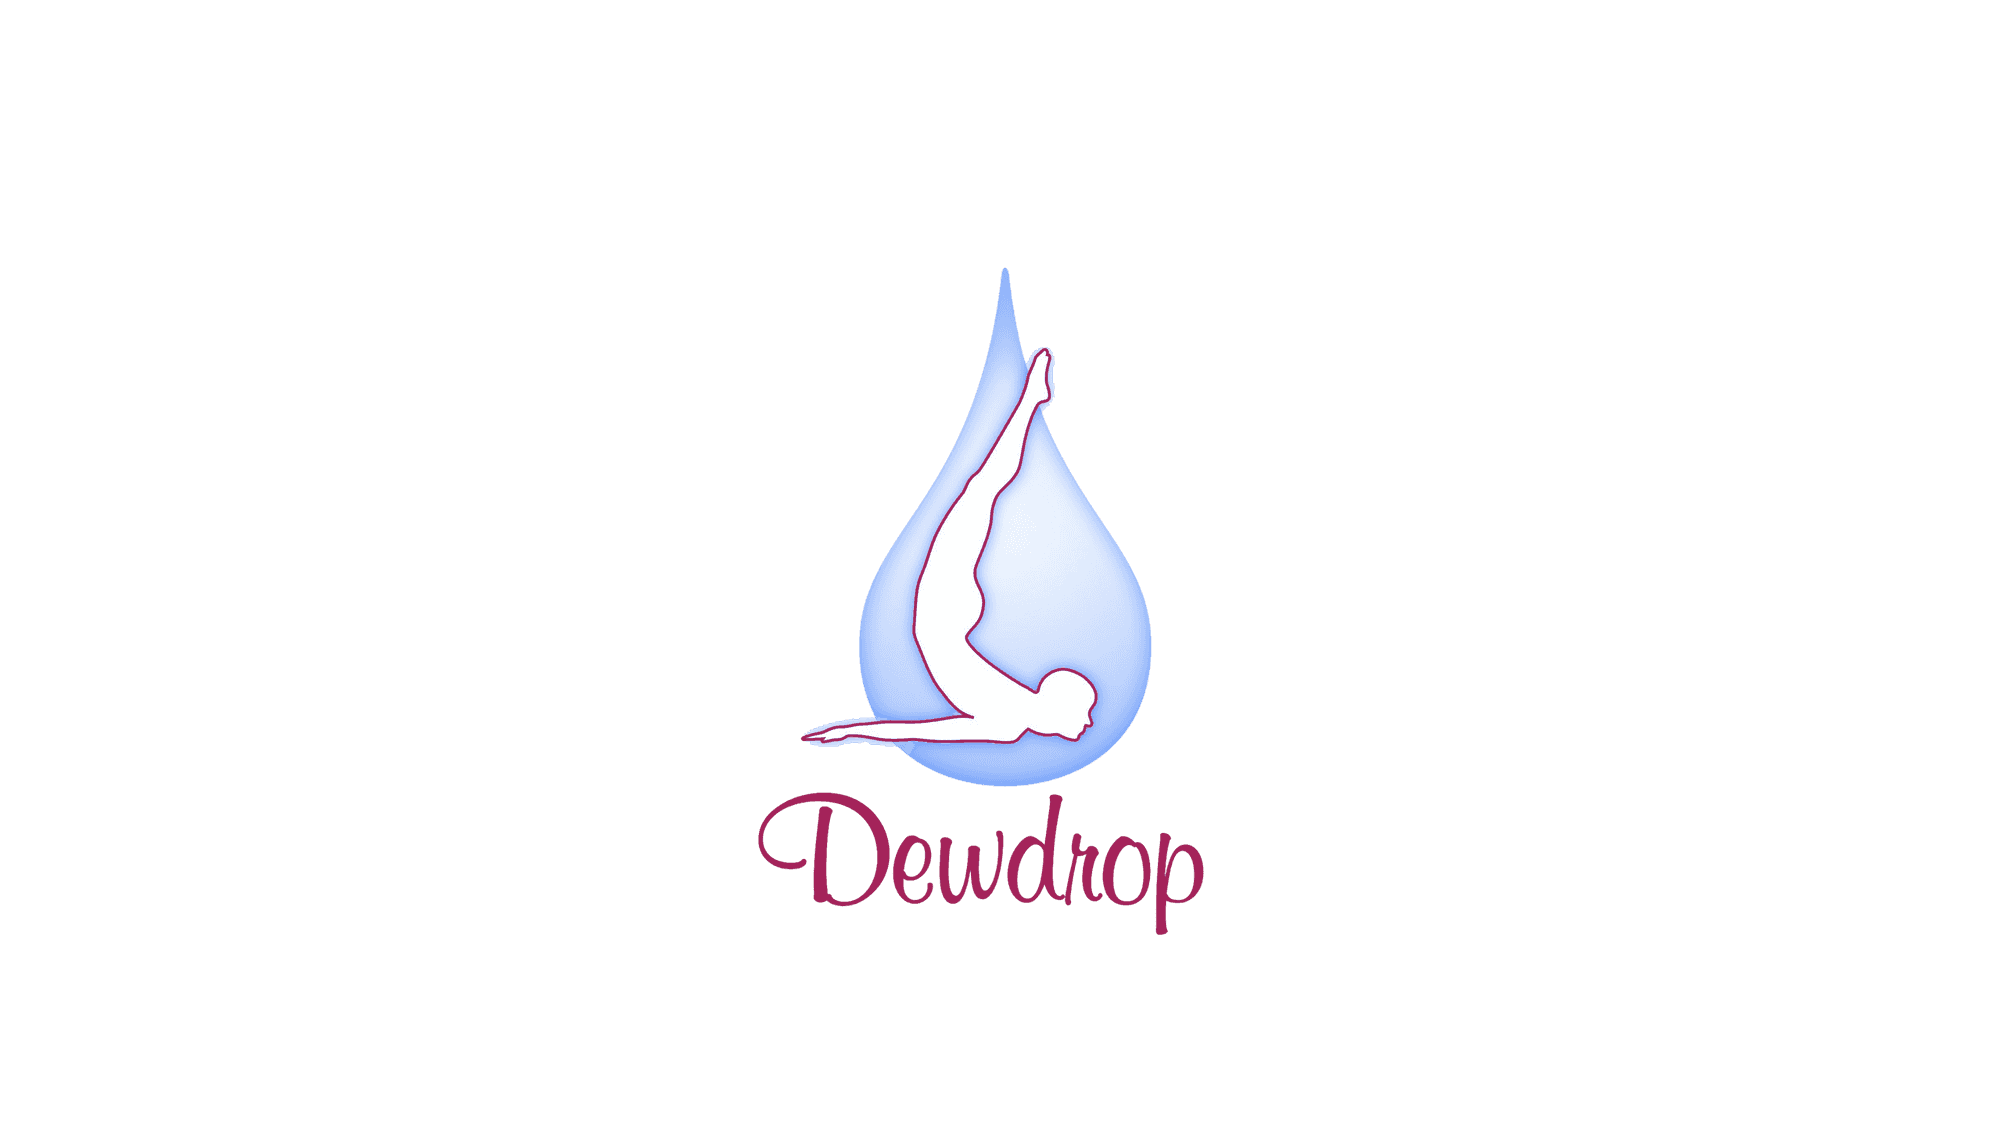 DEWDROP COMMUNITY – One Year membership